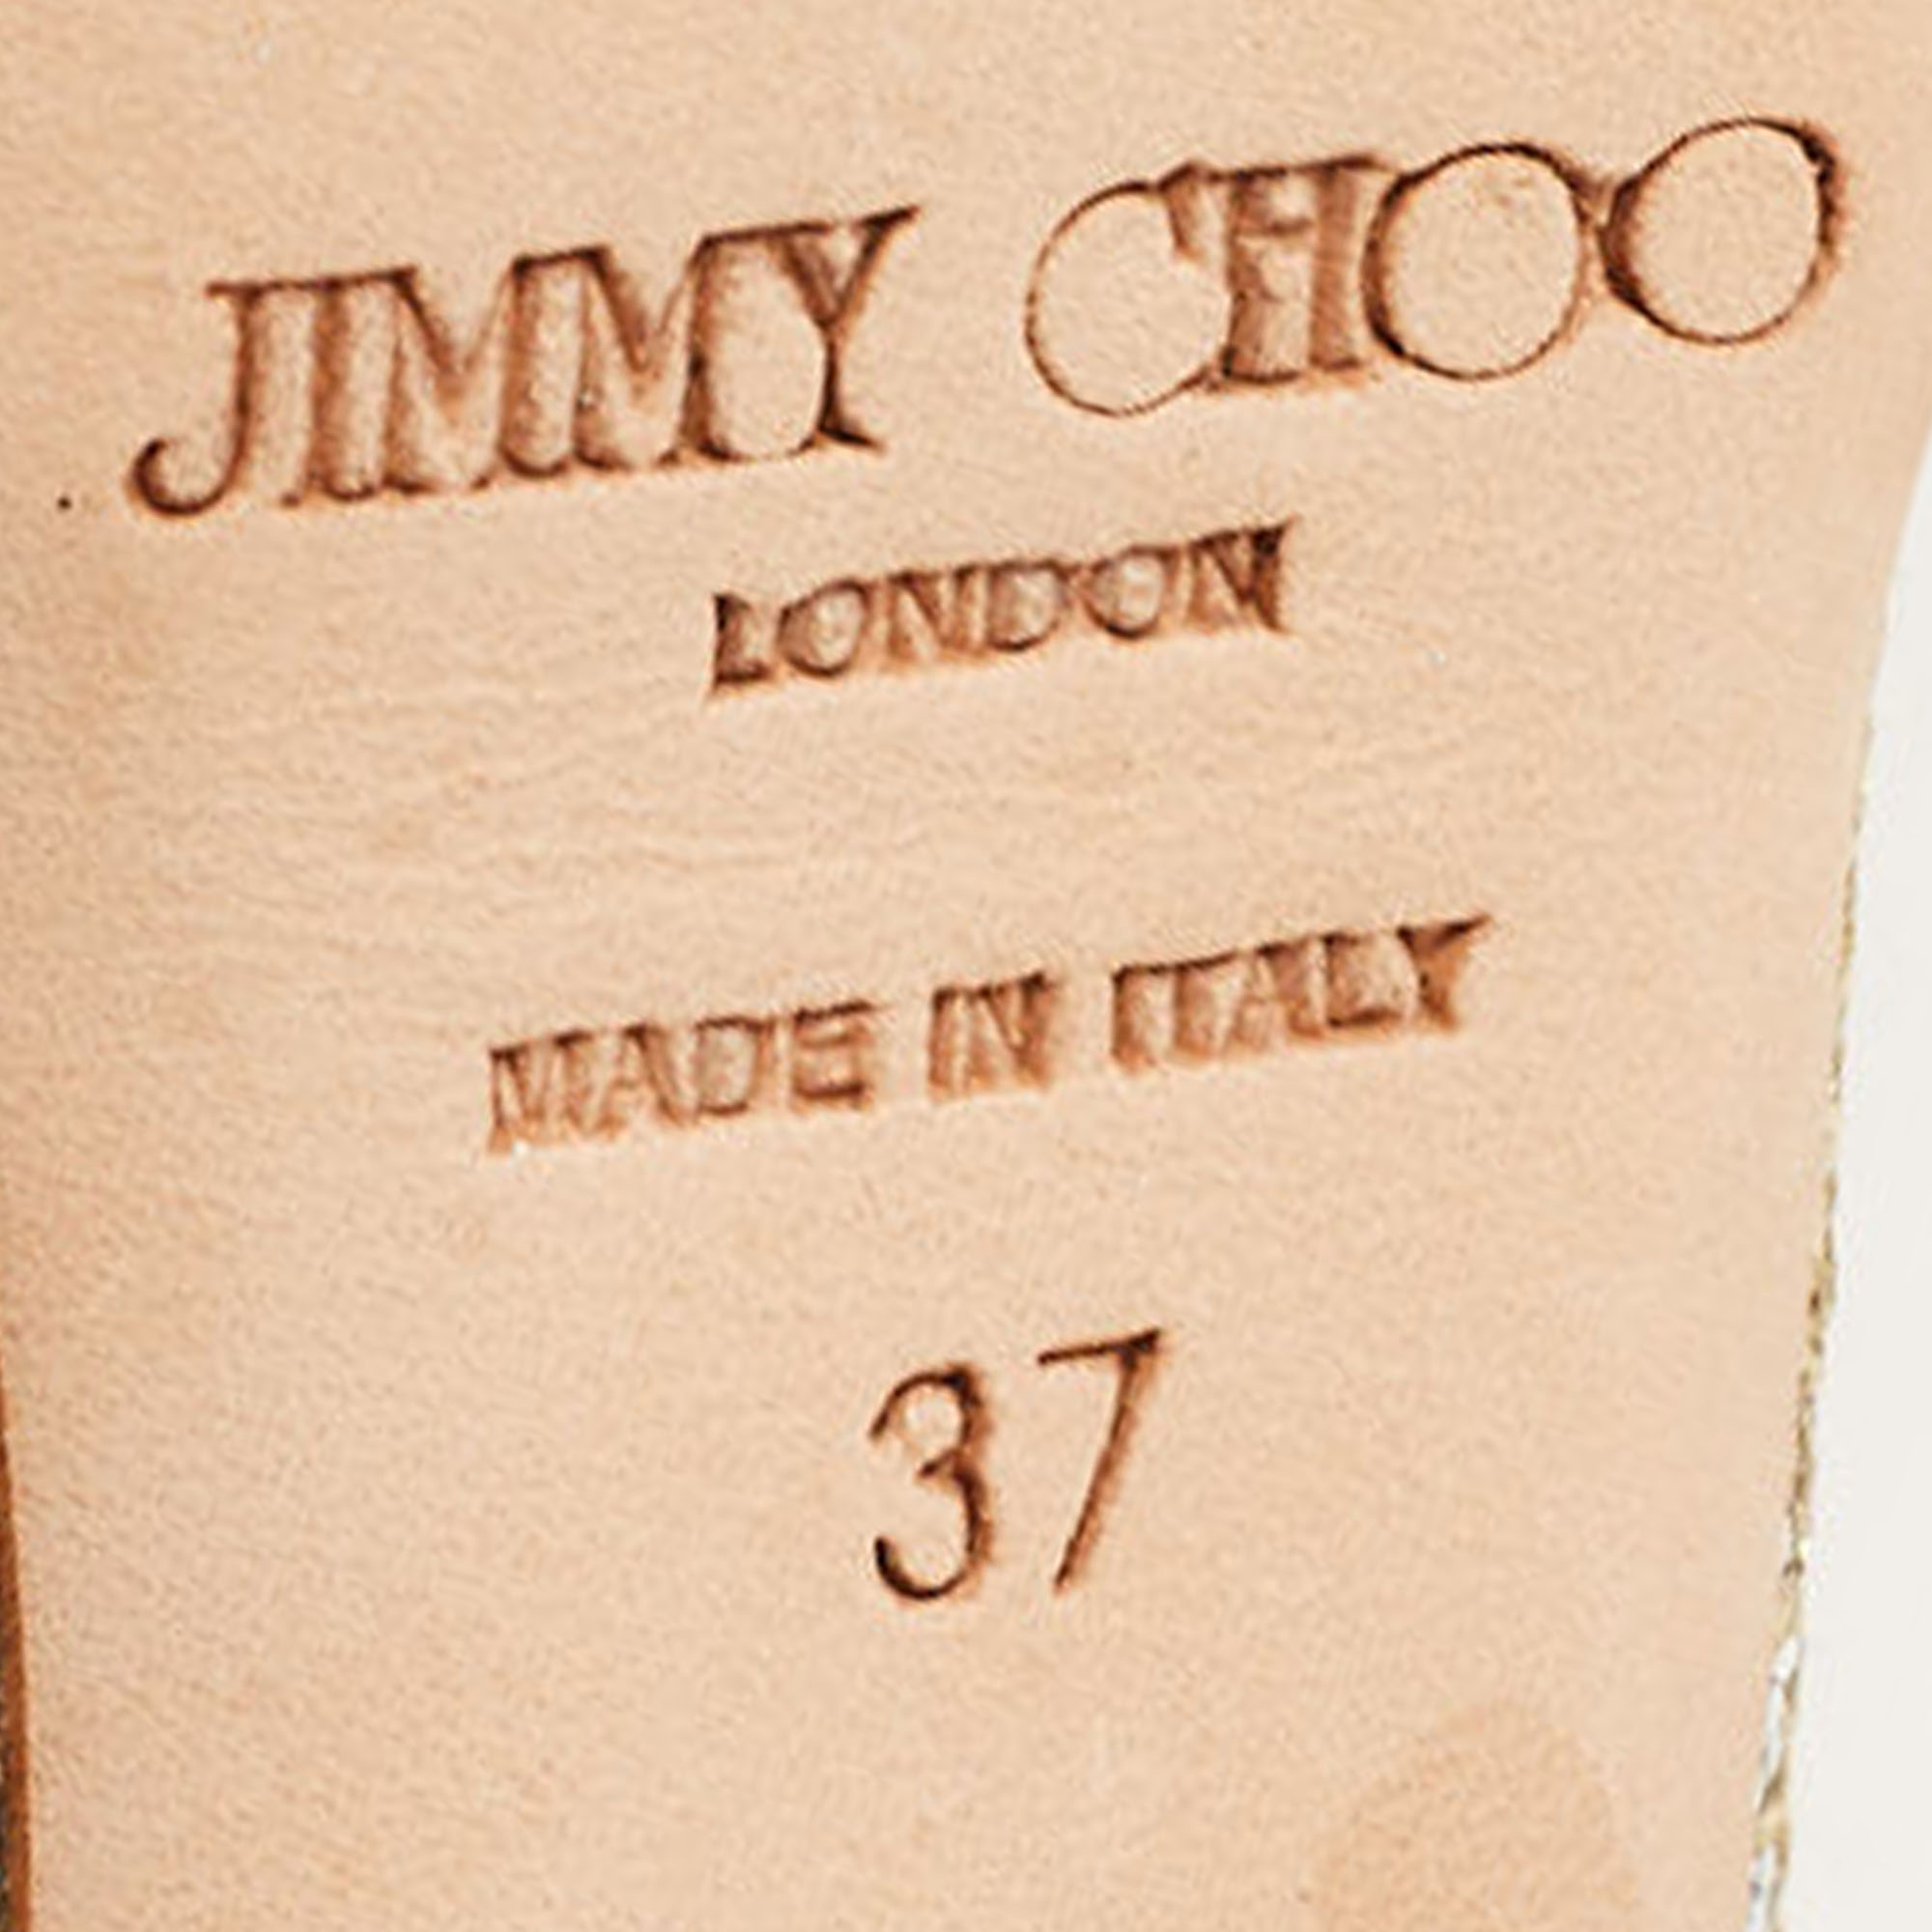 Jimmy Choo Gold/Silver Glitte Clue Slingback Sandals Size 37